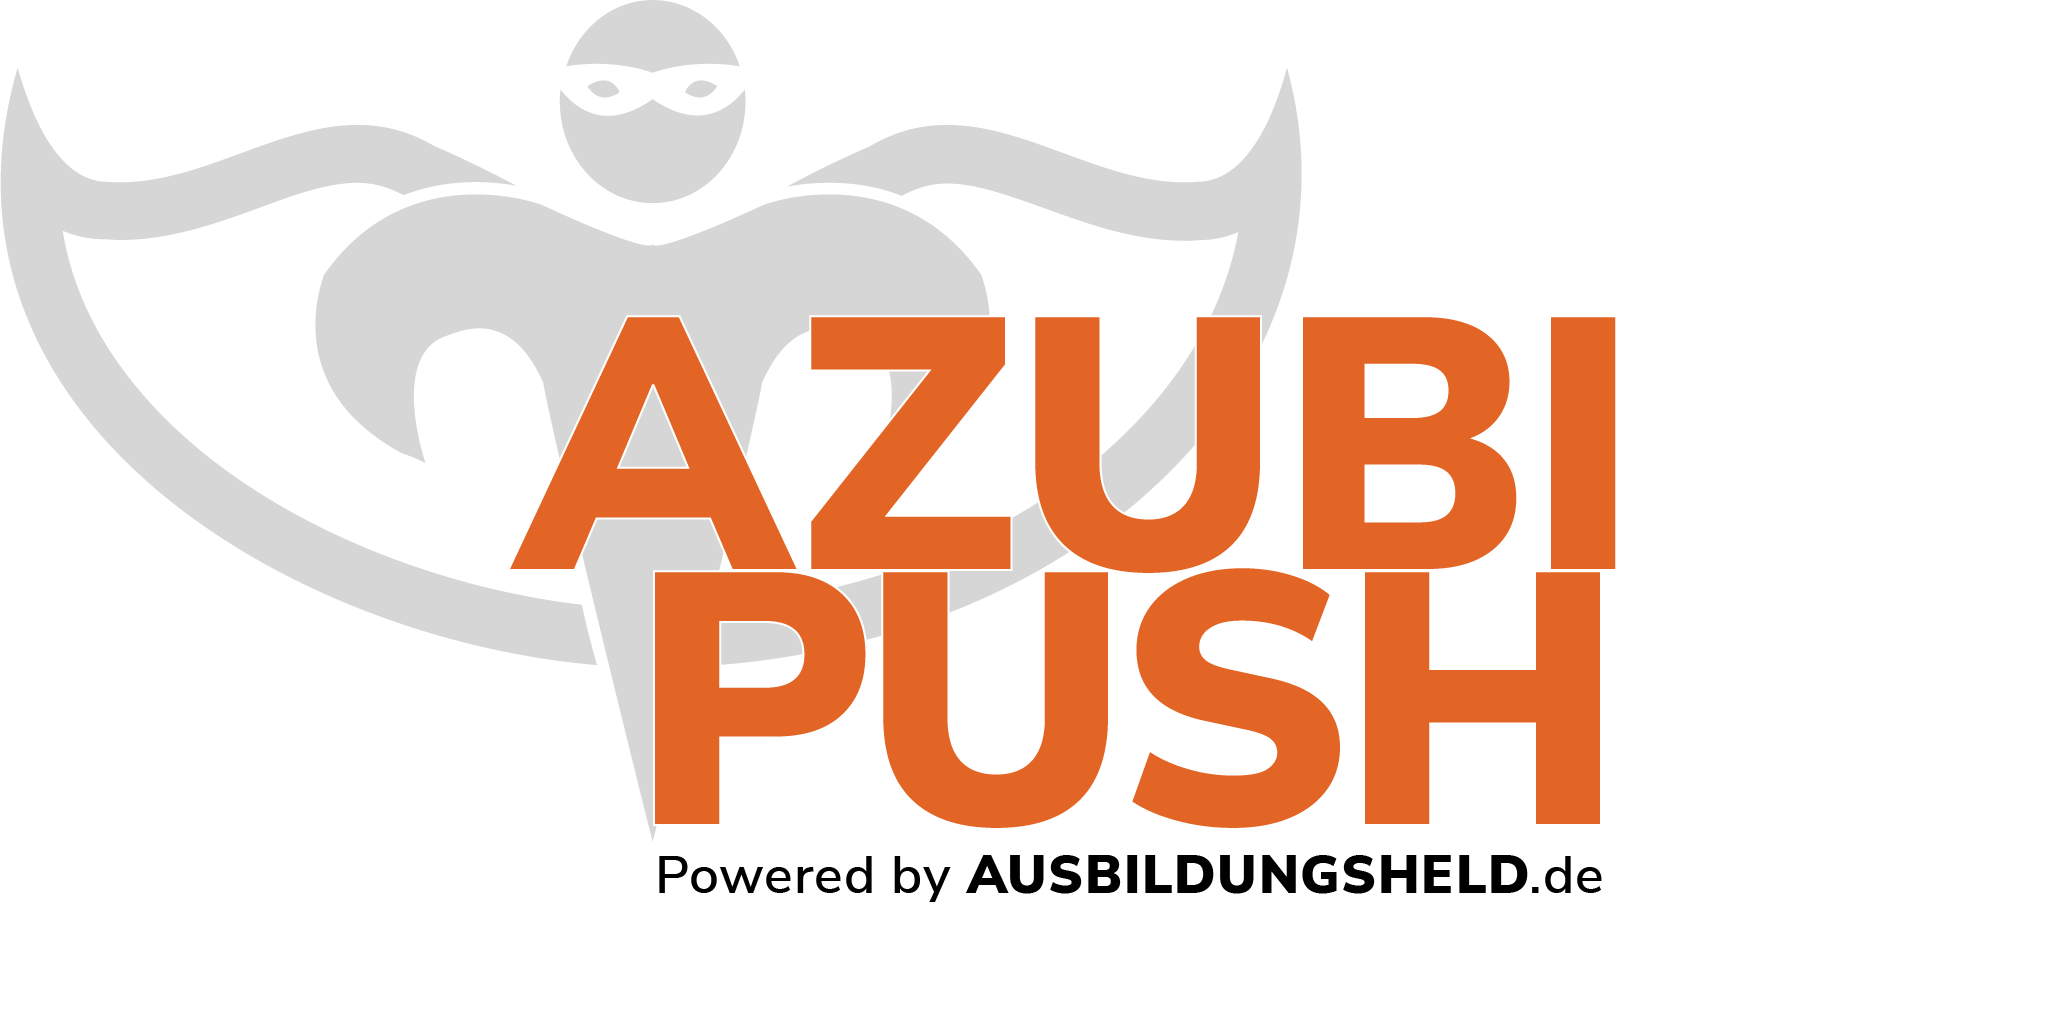 AzubiPush powered by Ausbildungsheld.de Logo